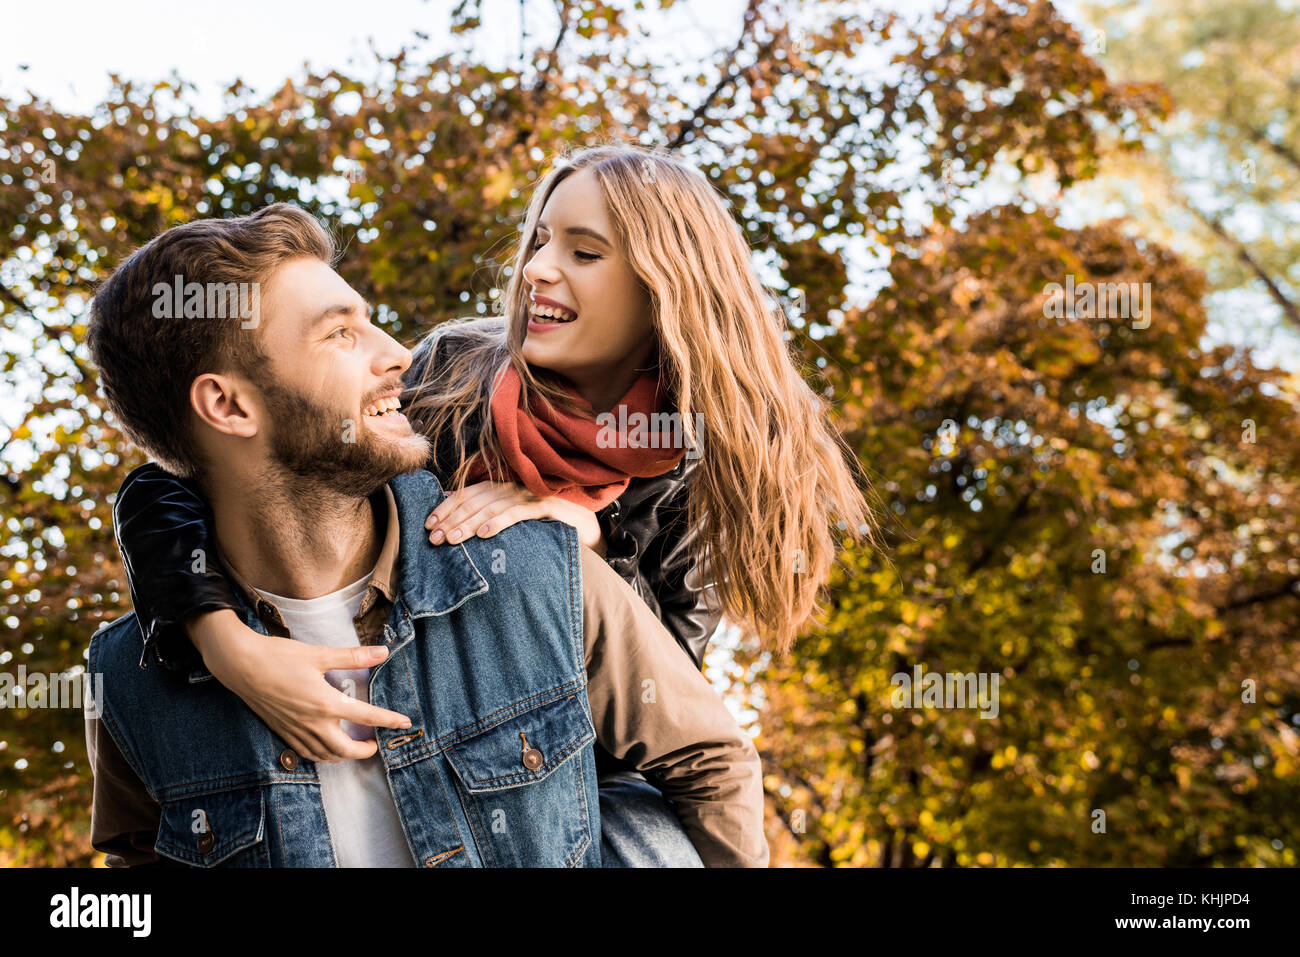 couple piggybacking in autumn park Stock Photo